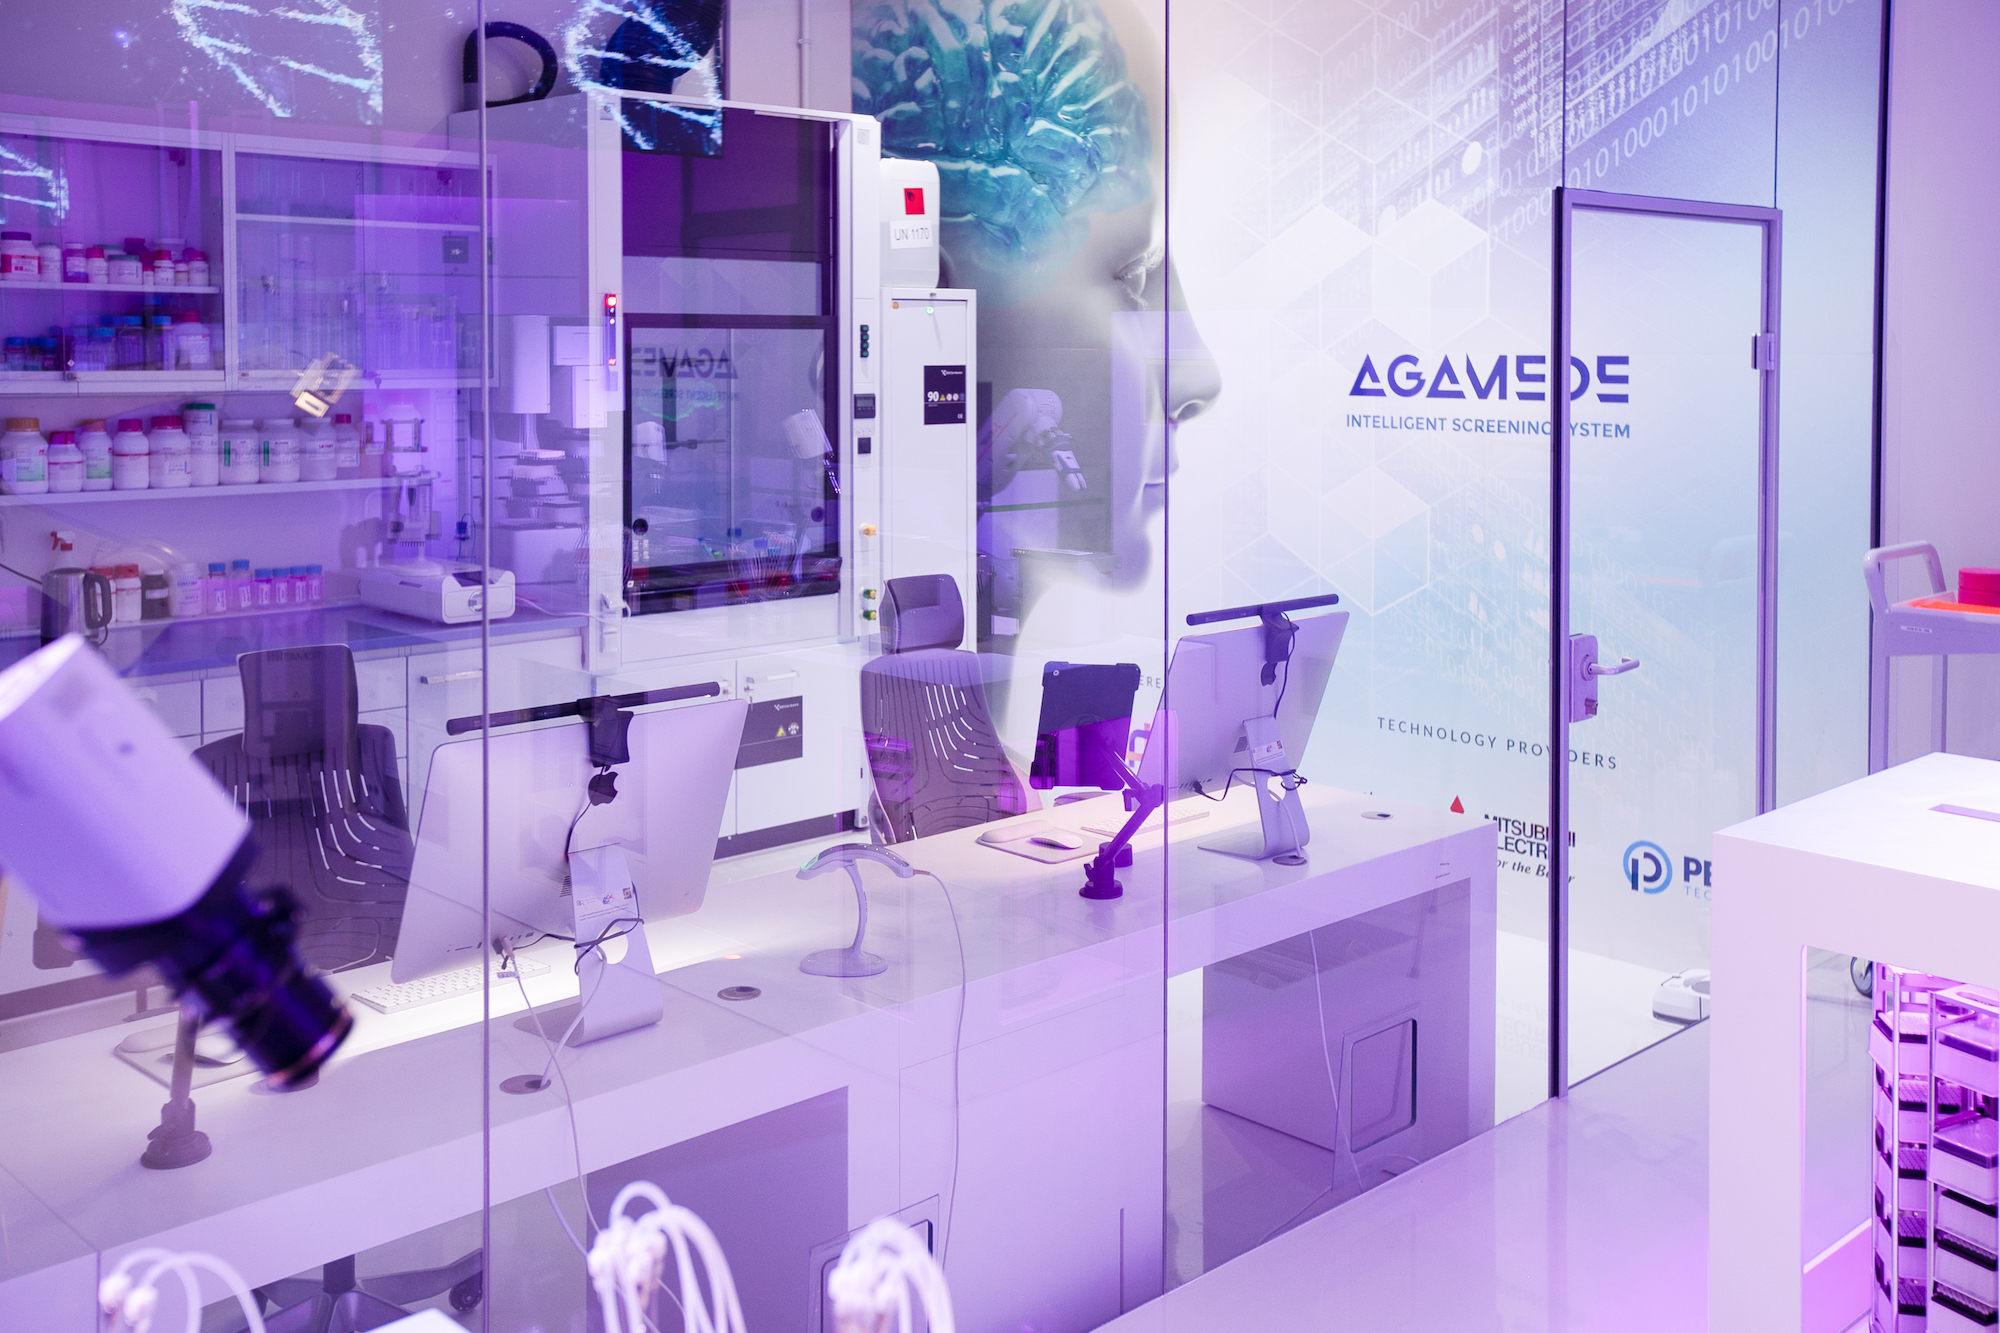 AGAMEDE – High-throughput Screening Laboratory